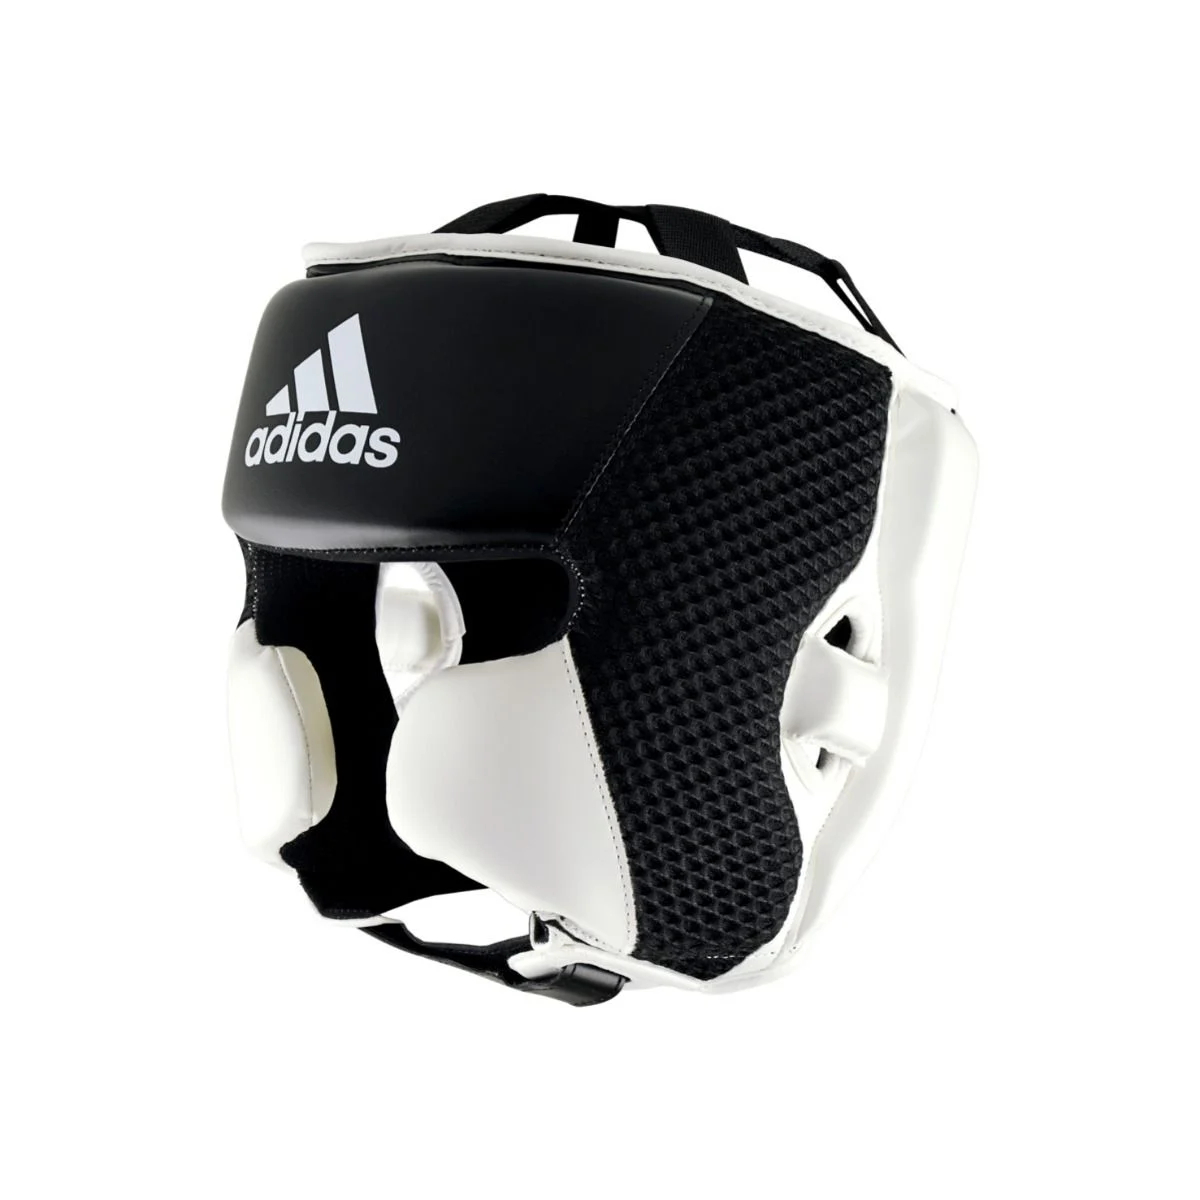 Adidas Hybrid 150 Boxing Head Guard - Click Image to Close